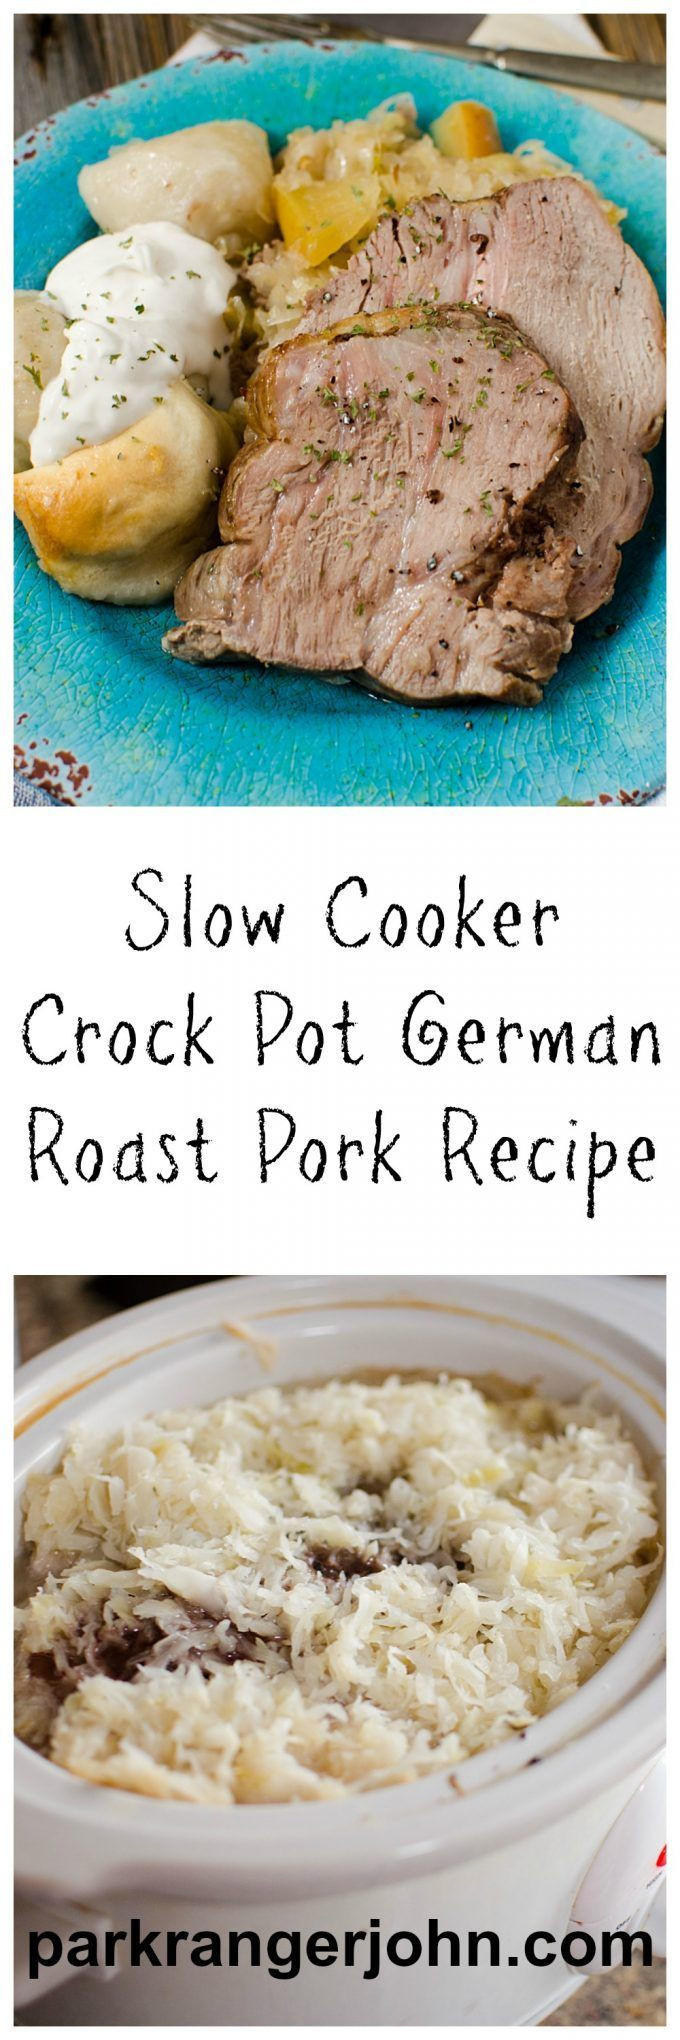 Pork Roast Crock Pot Recipes Slow Cooker Keto
 Slow Cooker Crock Pot German Pork Roast & Sauerkraut is